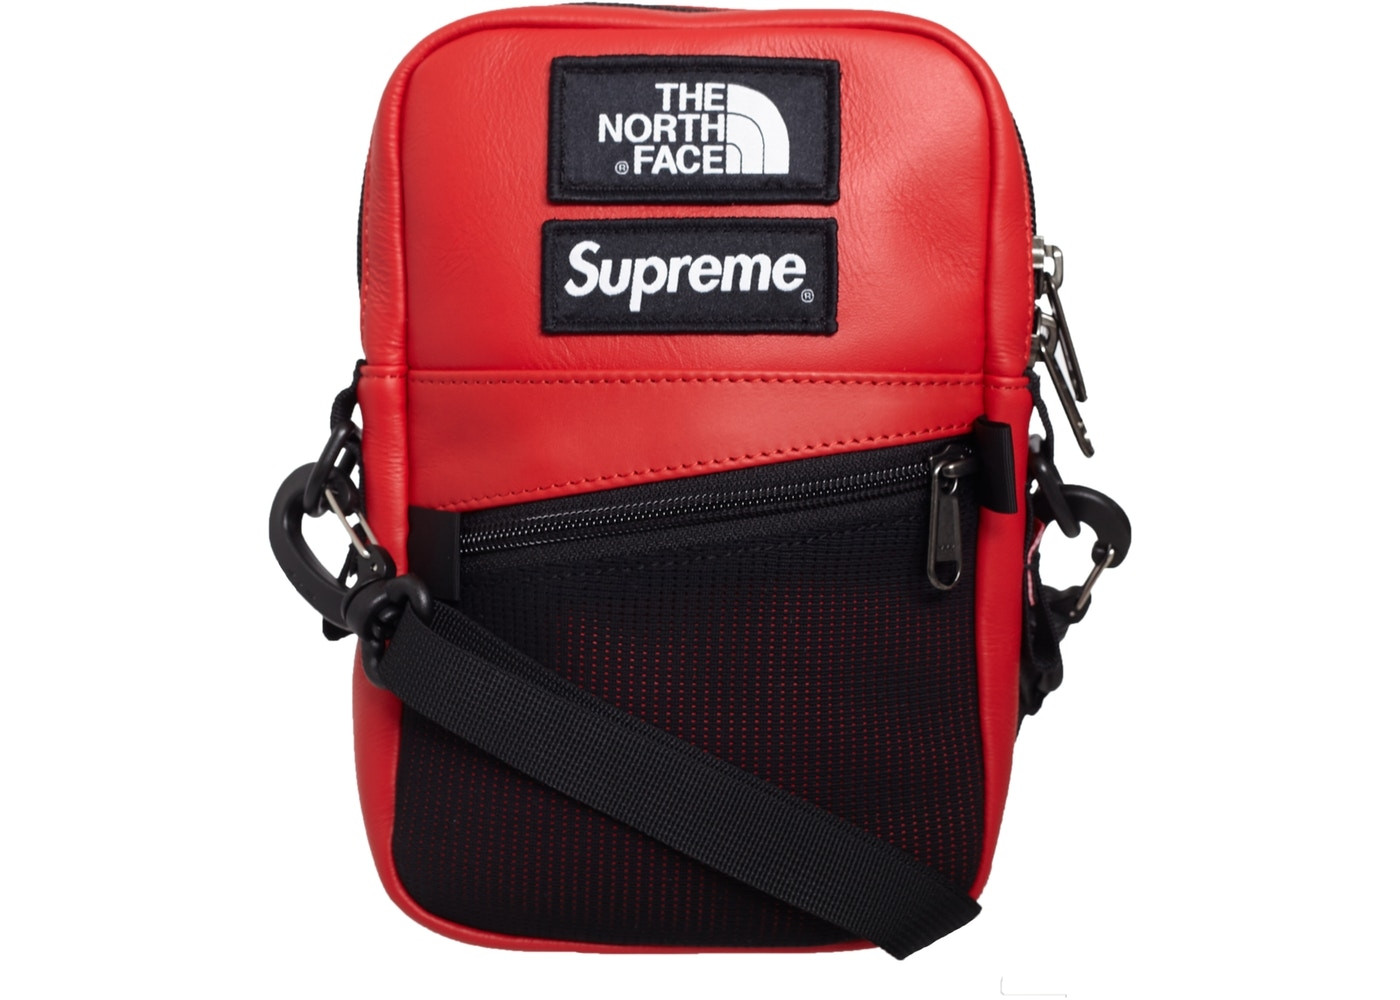 Supreme The North Face Leather Shoulder Bag "Red"